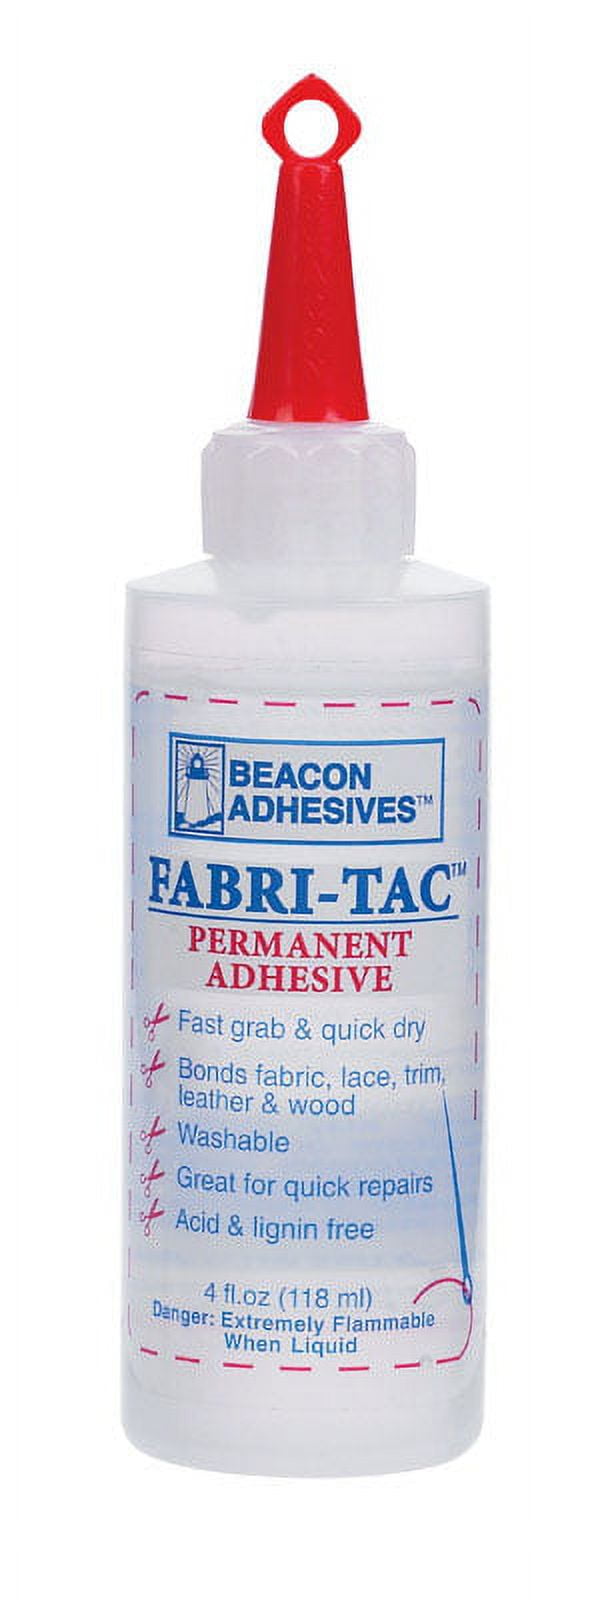 Fabri-tac Permanent Adhesive — Frank Garcia Studio